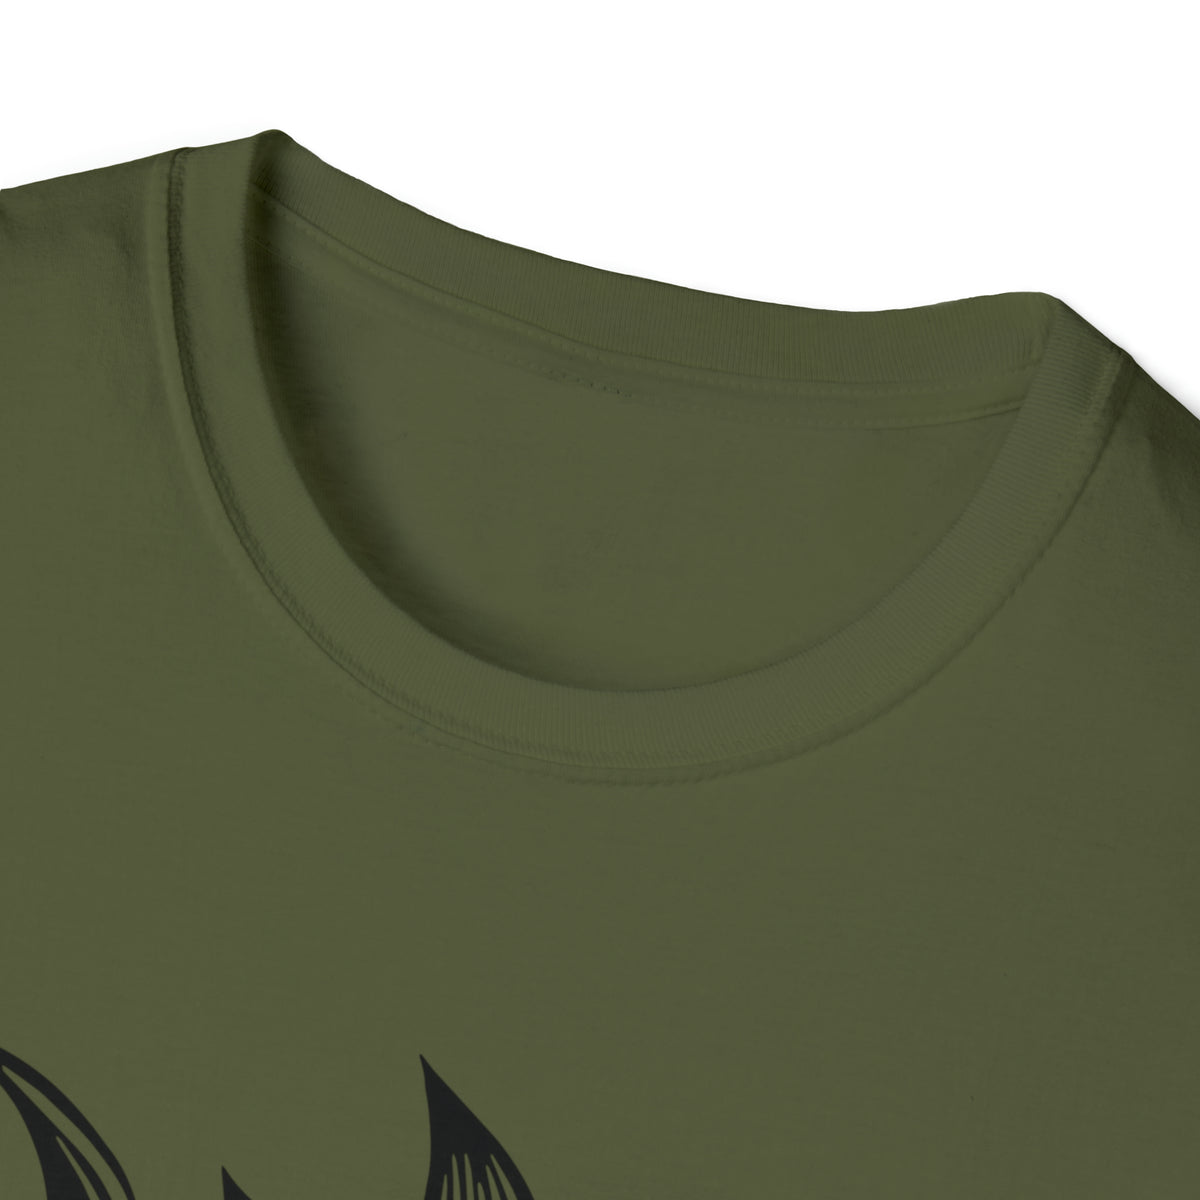 Wombat Tshirt - 4 Colours